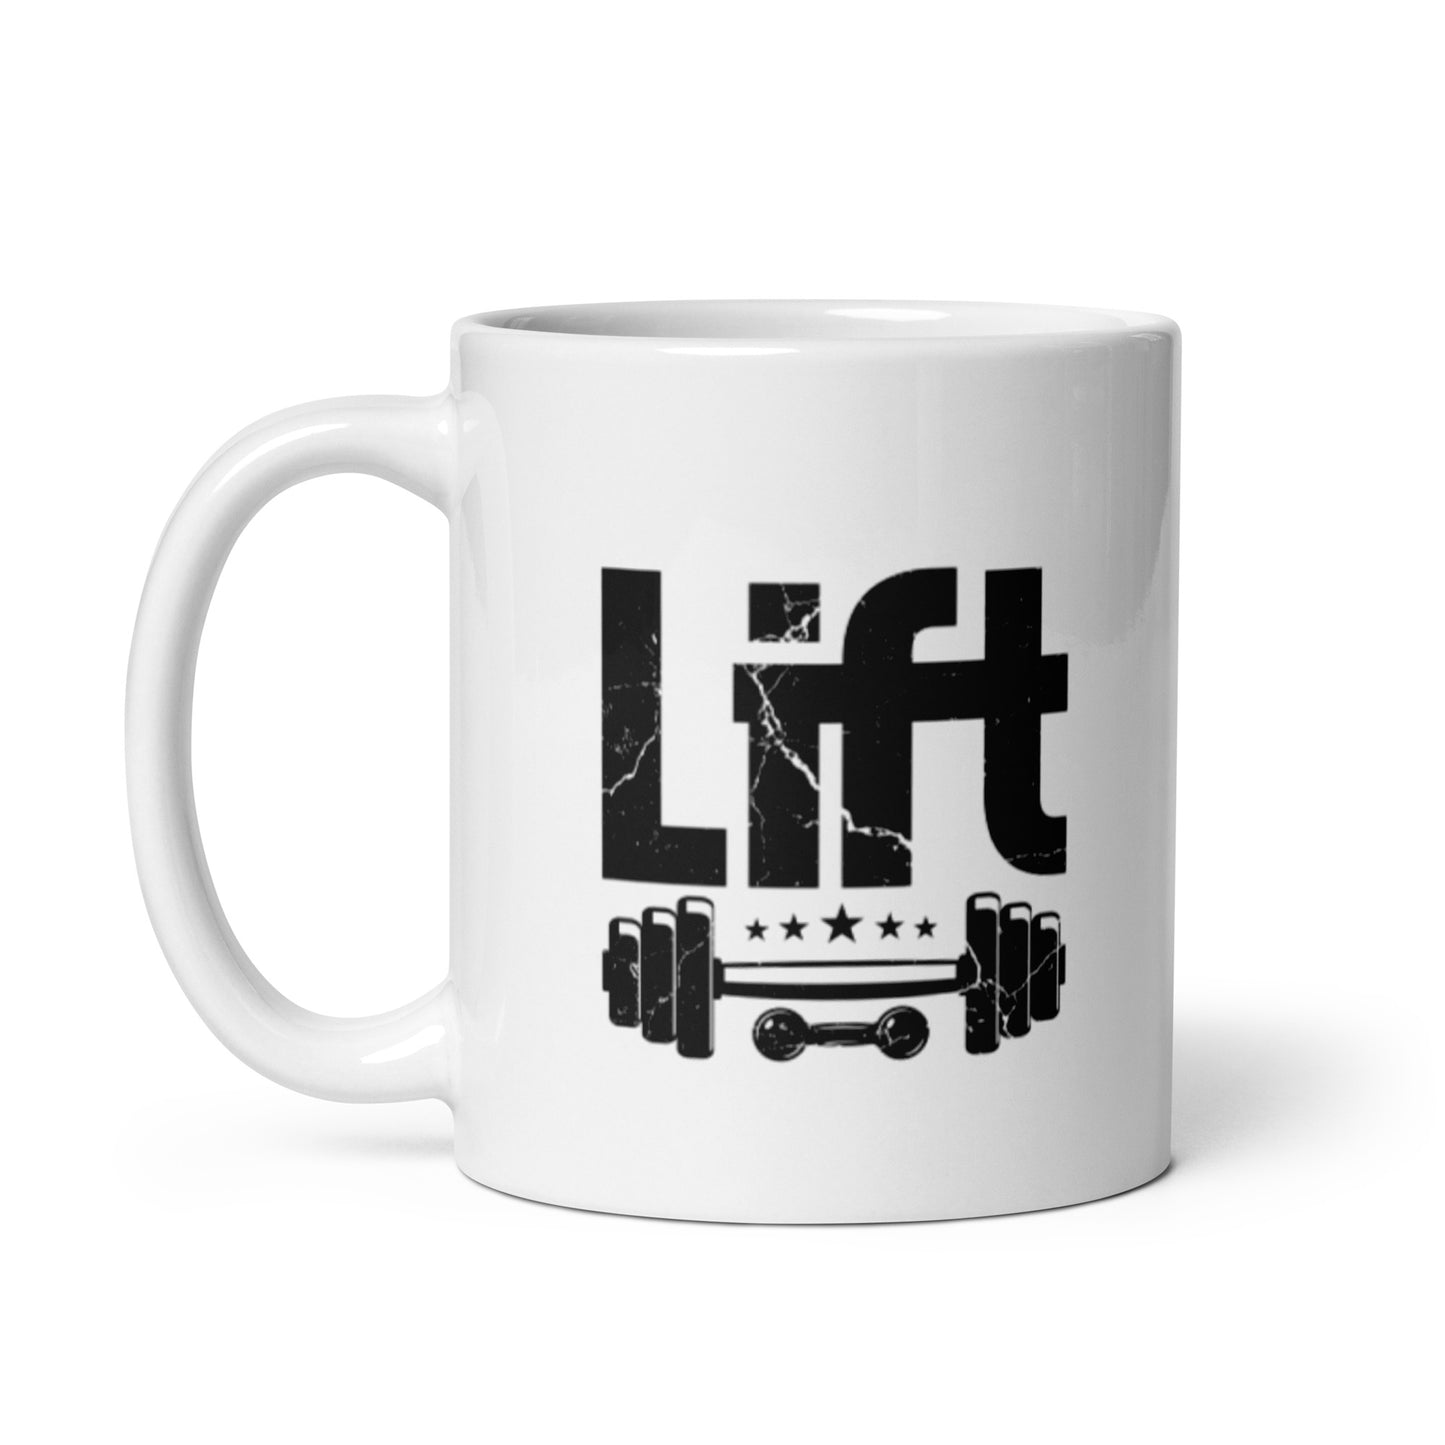 Lift White glossy mug